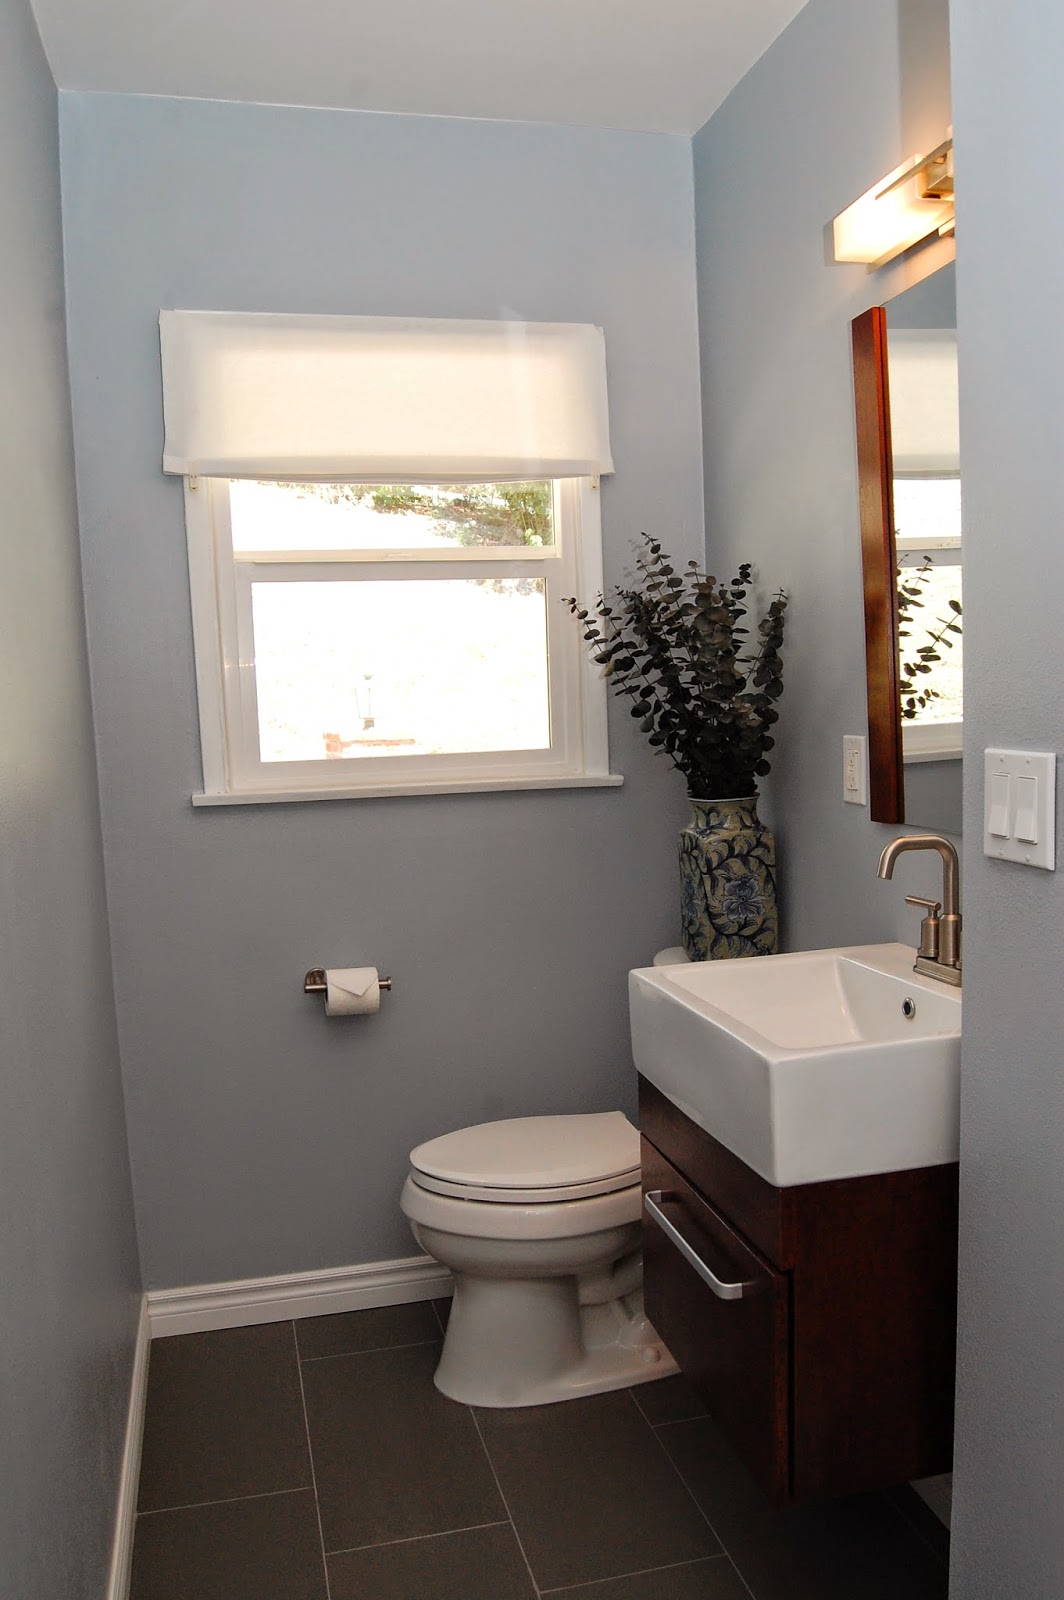 CAD INTERIORS guest bathroom renovation modern transitional